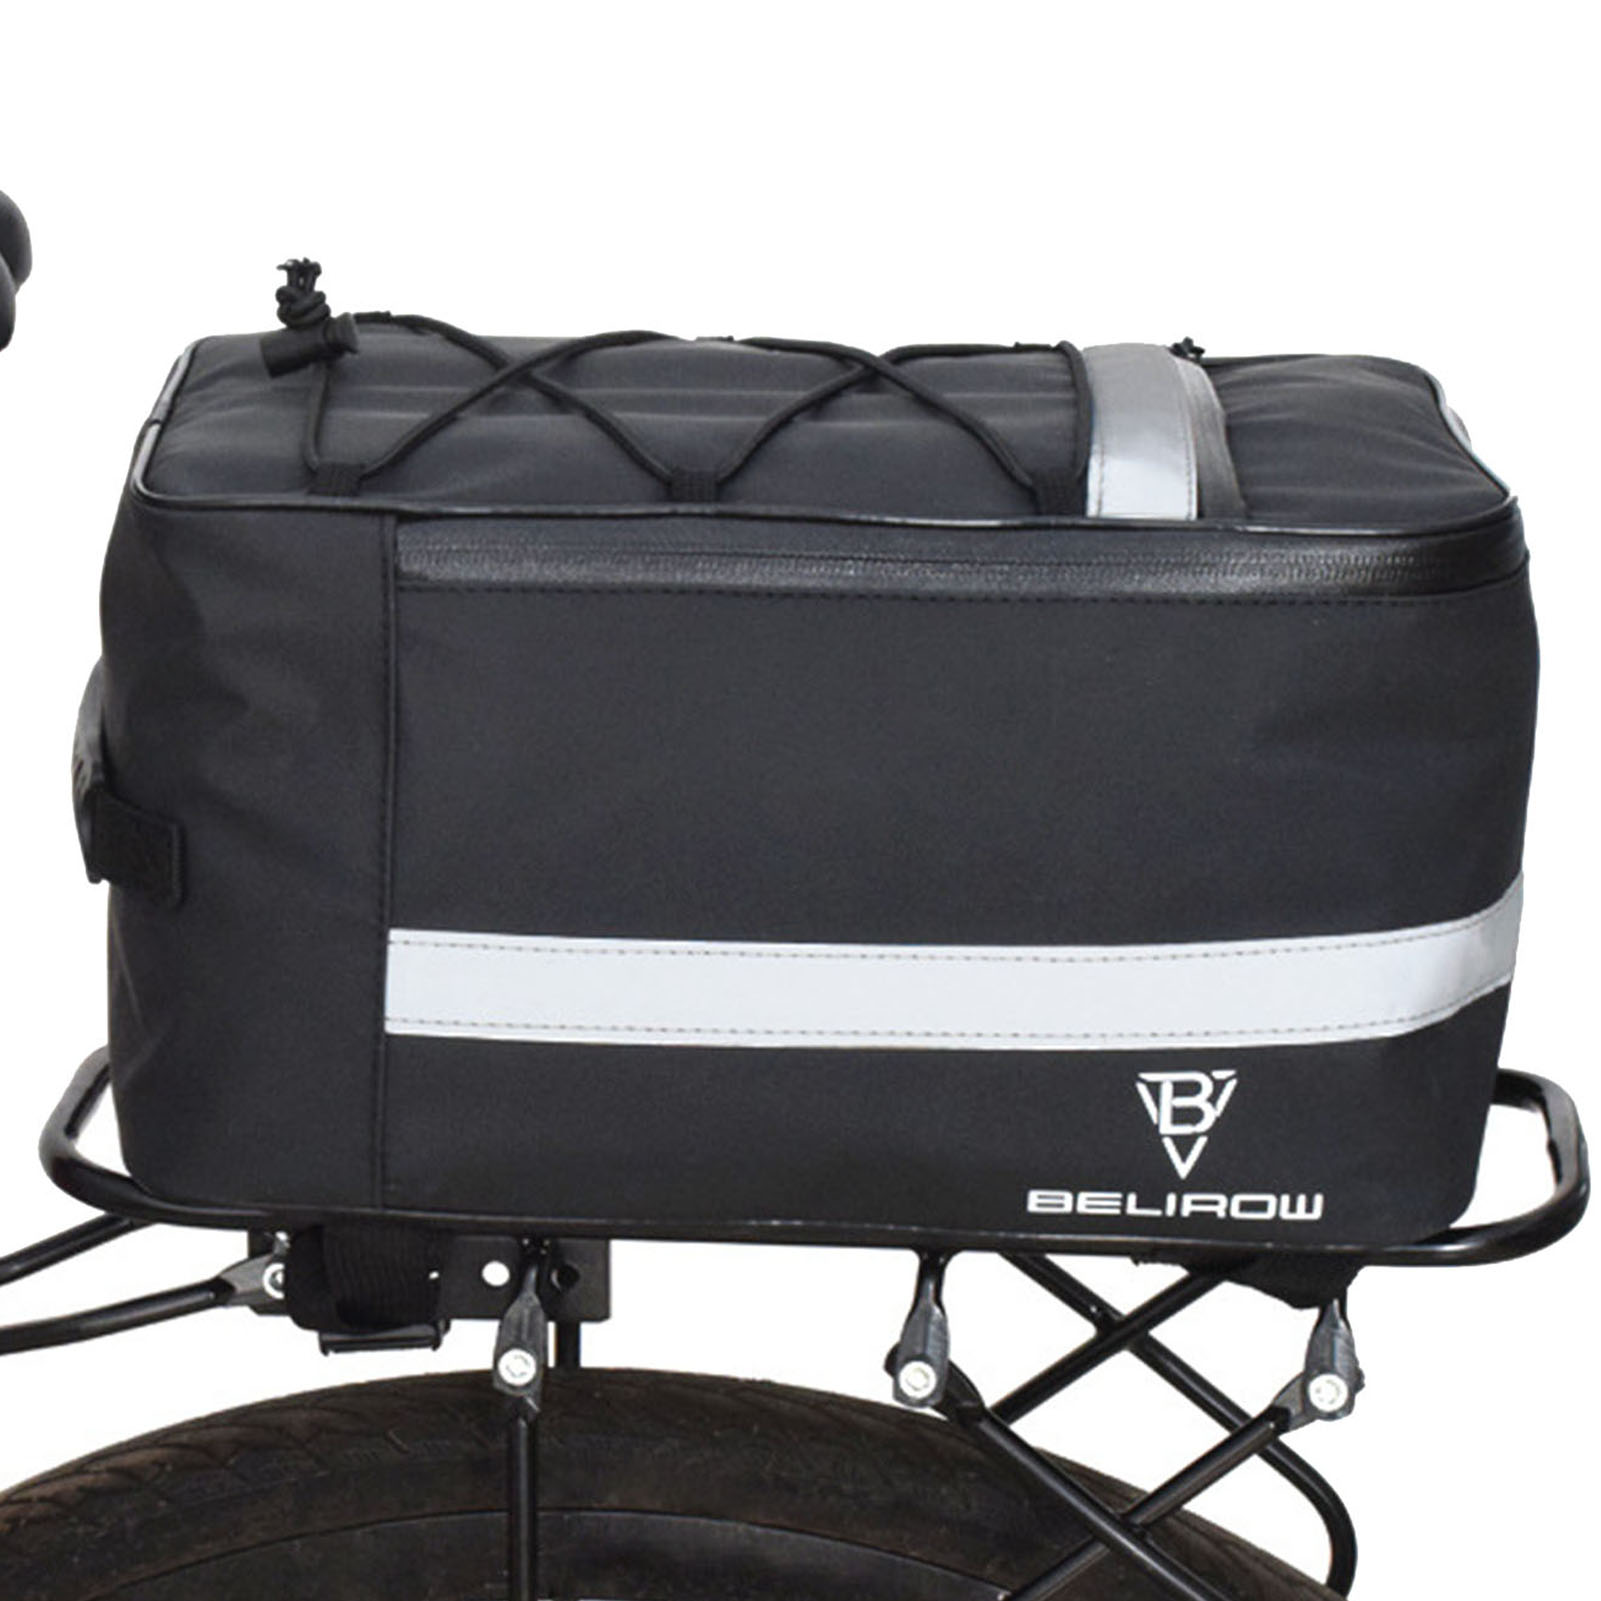 Portable Bike Trunk Bag Waterproof Bicycle Rack Rear Bag 8L/15L Rear Seat Saddle Bag Cycling Bag Reflective Luggage Carrier